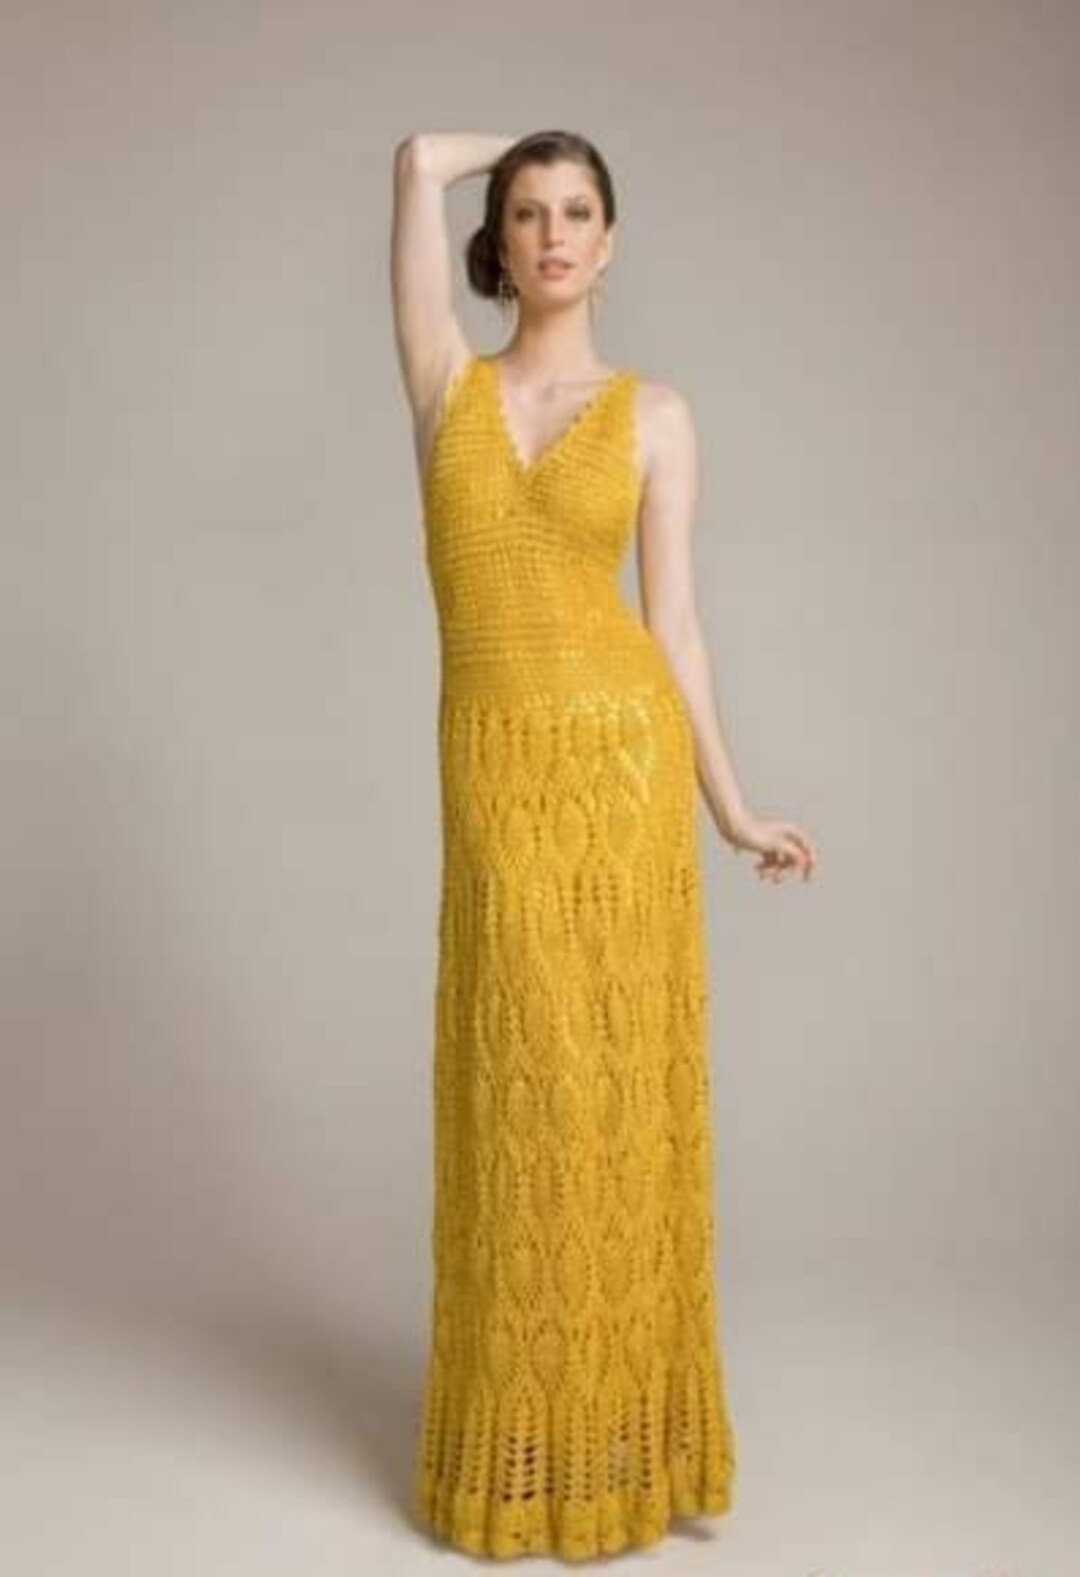 Ladies Long Dress in Yellow Gold Color Crochet Wedding Dress - Etsy